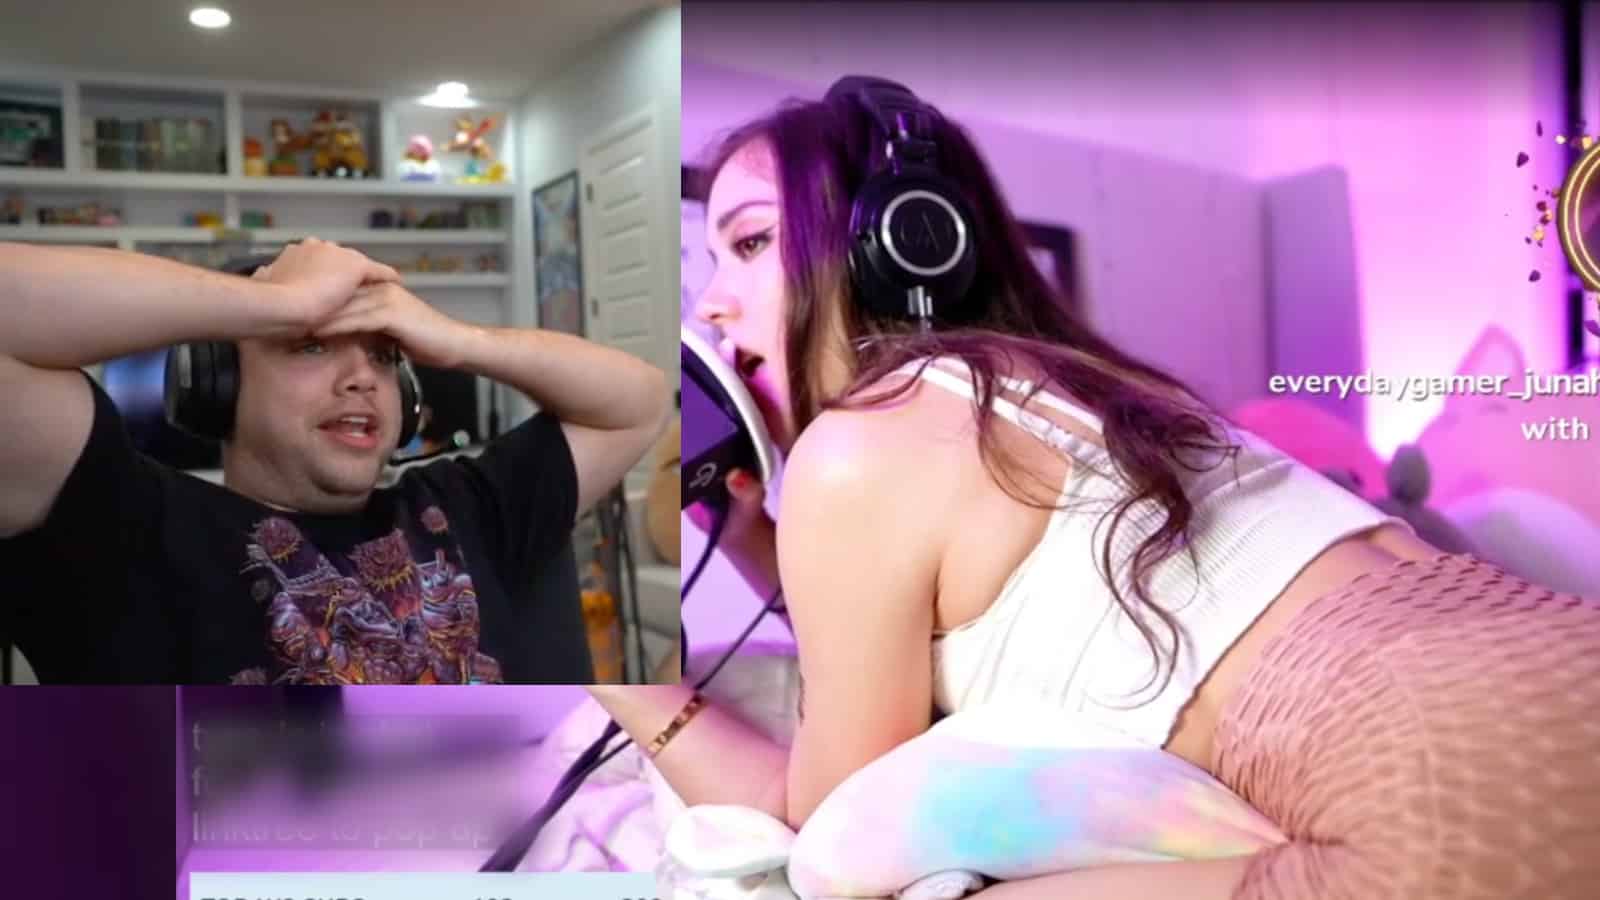 Twitch streamer has sex live